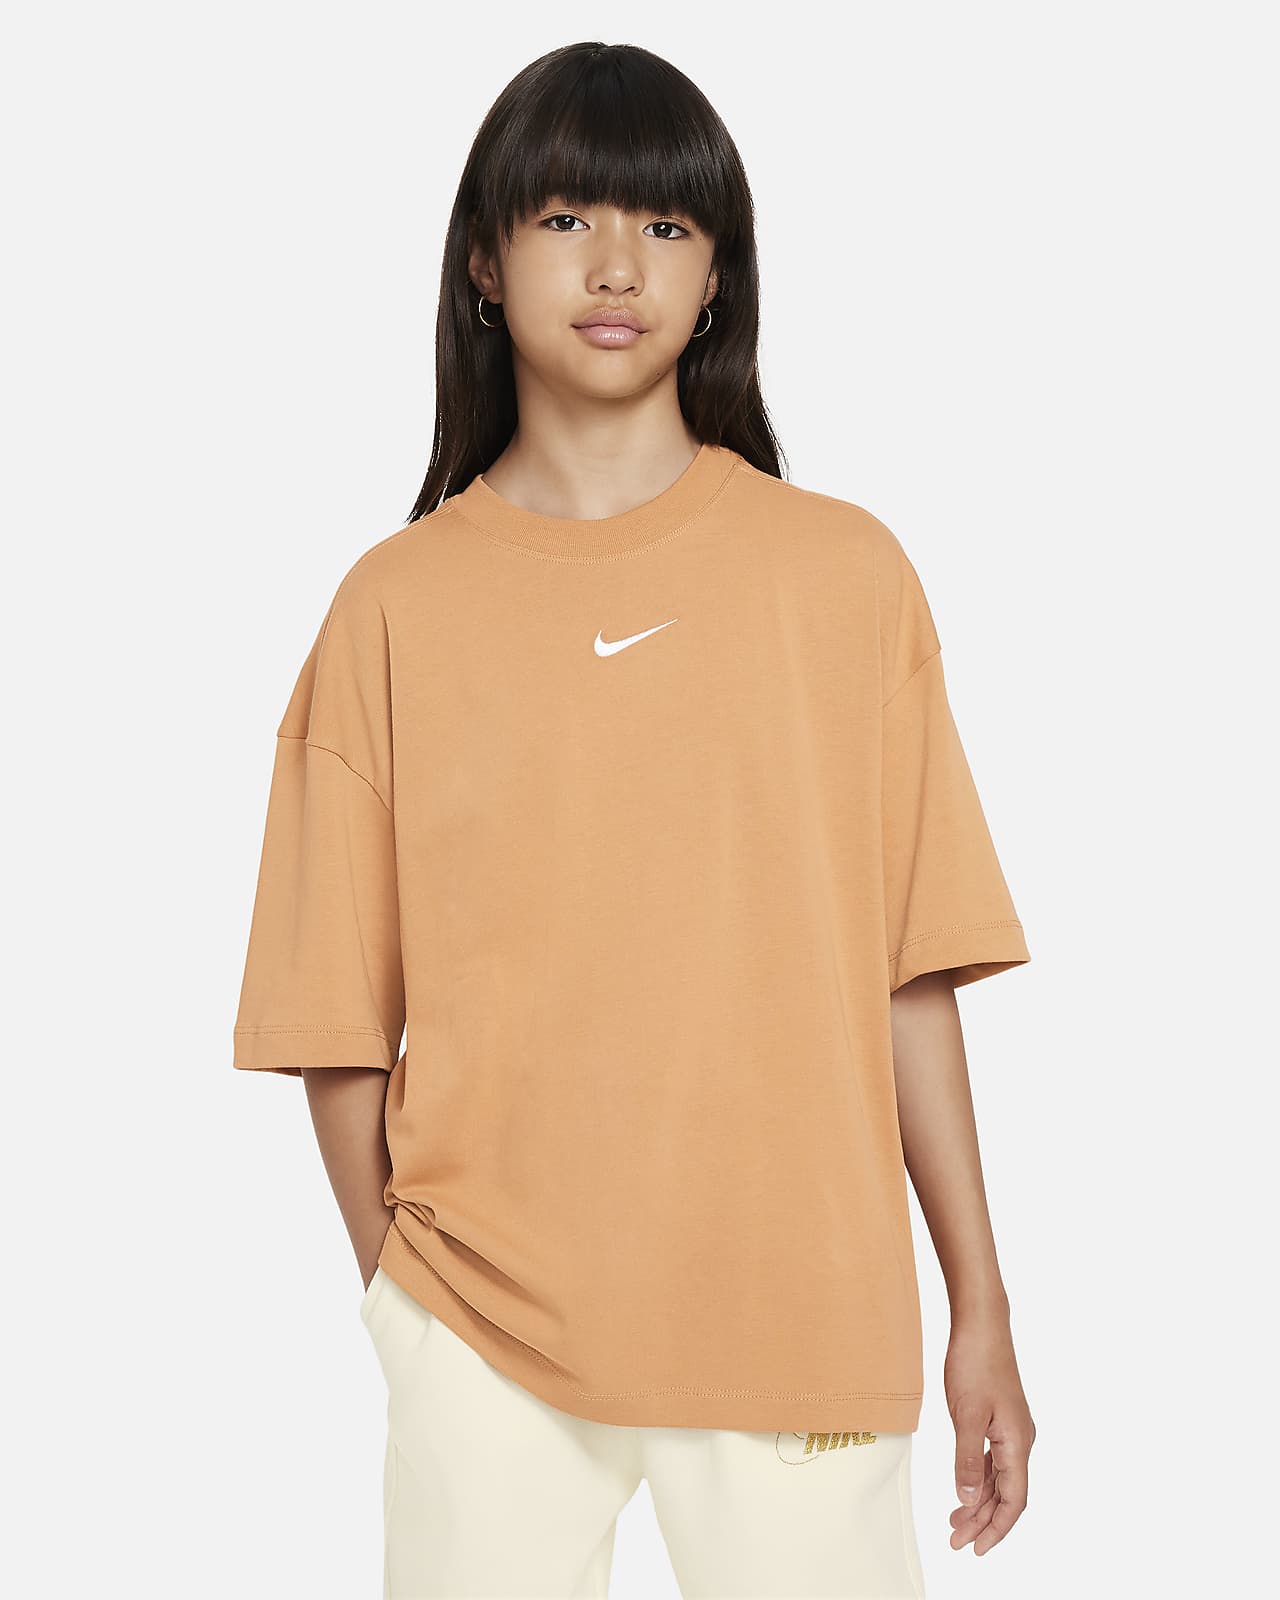 Nike Sportswear Big Kids' (Girls) T-shirt.